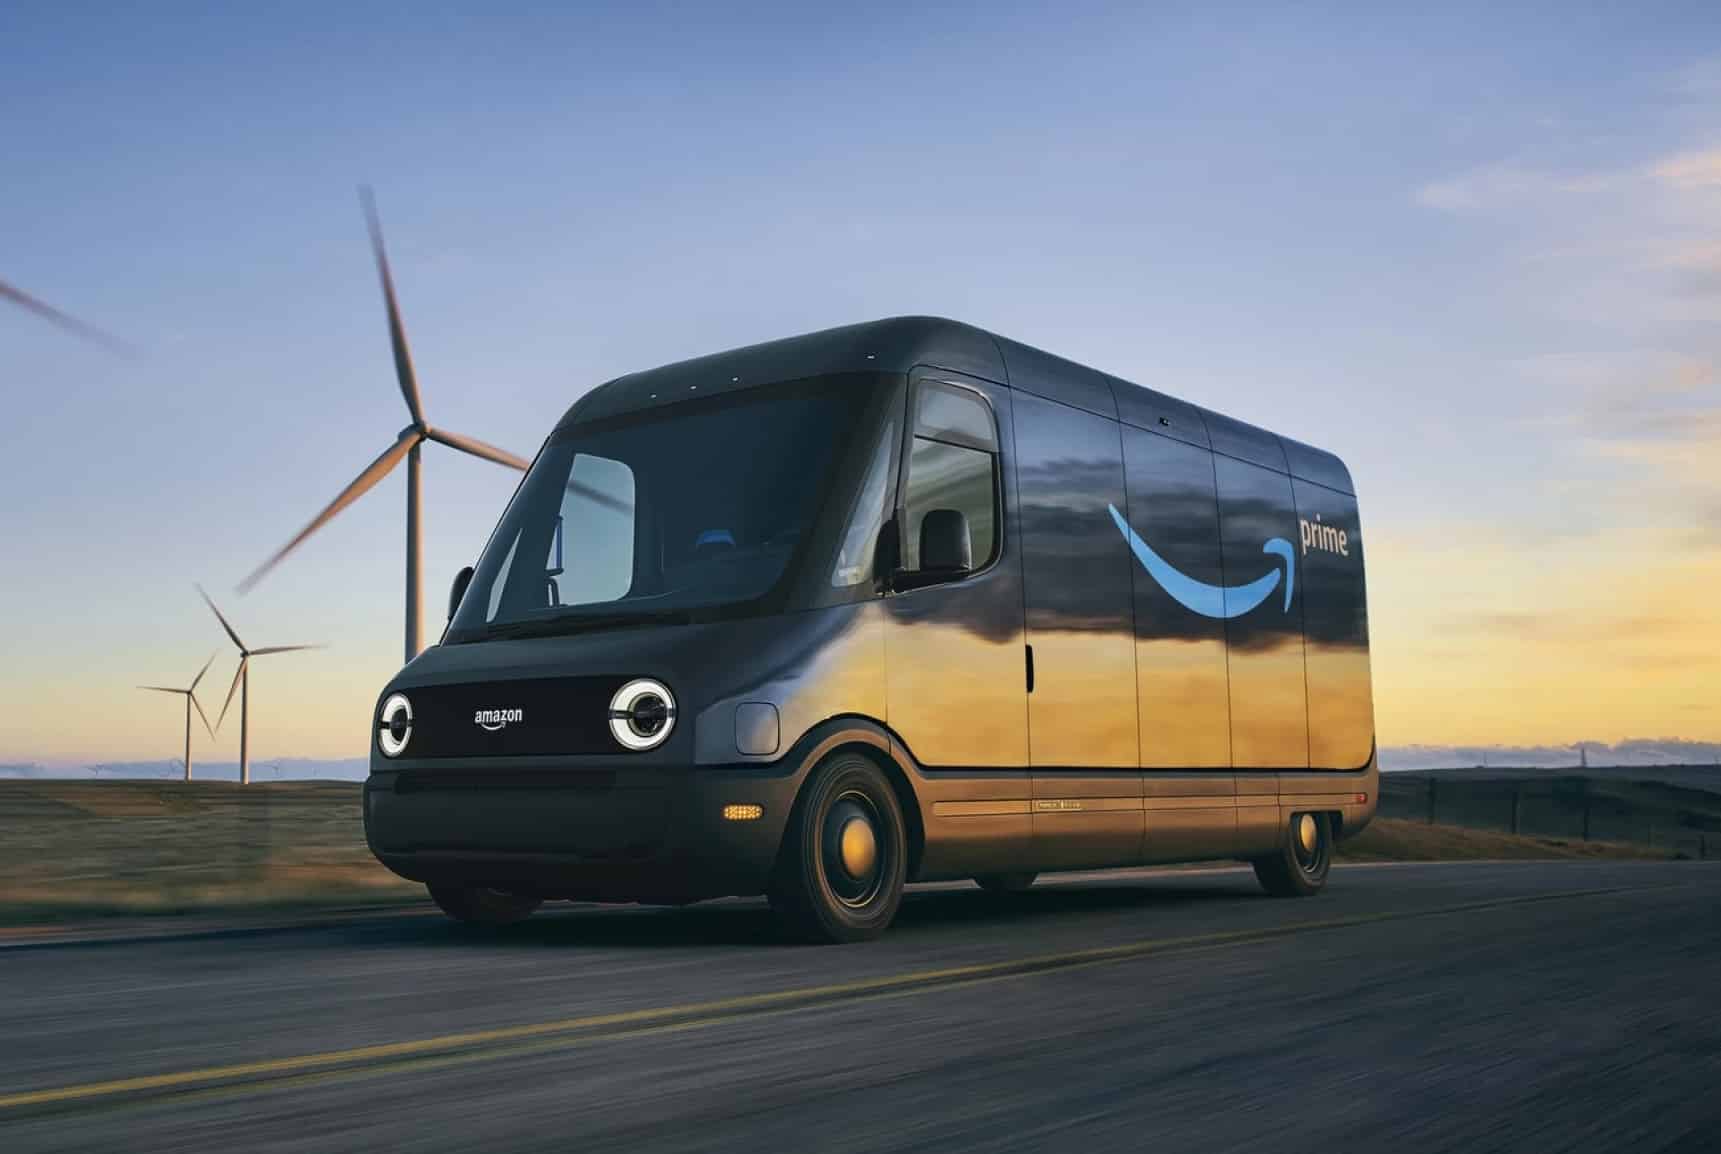 Amazon's Rivian Electric Vans: Key Insights - The EV Report